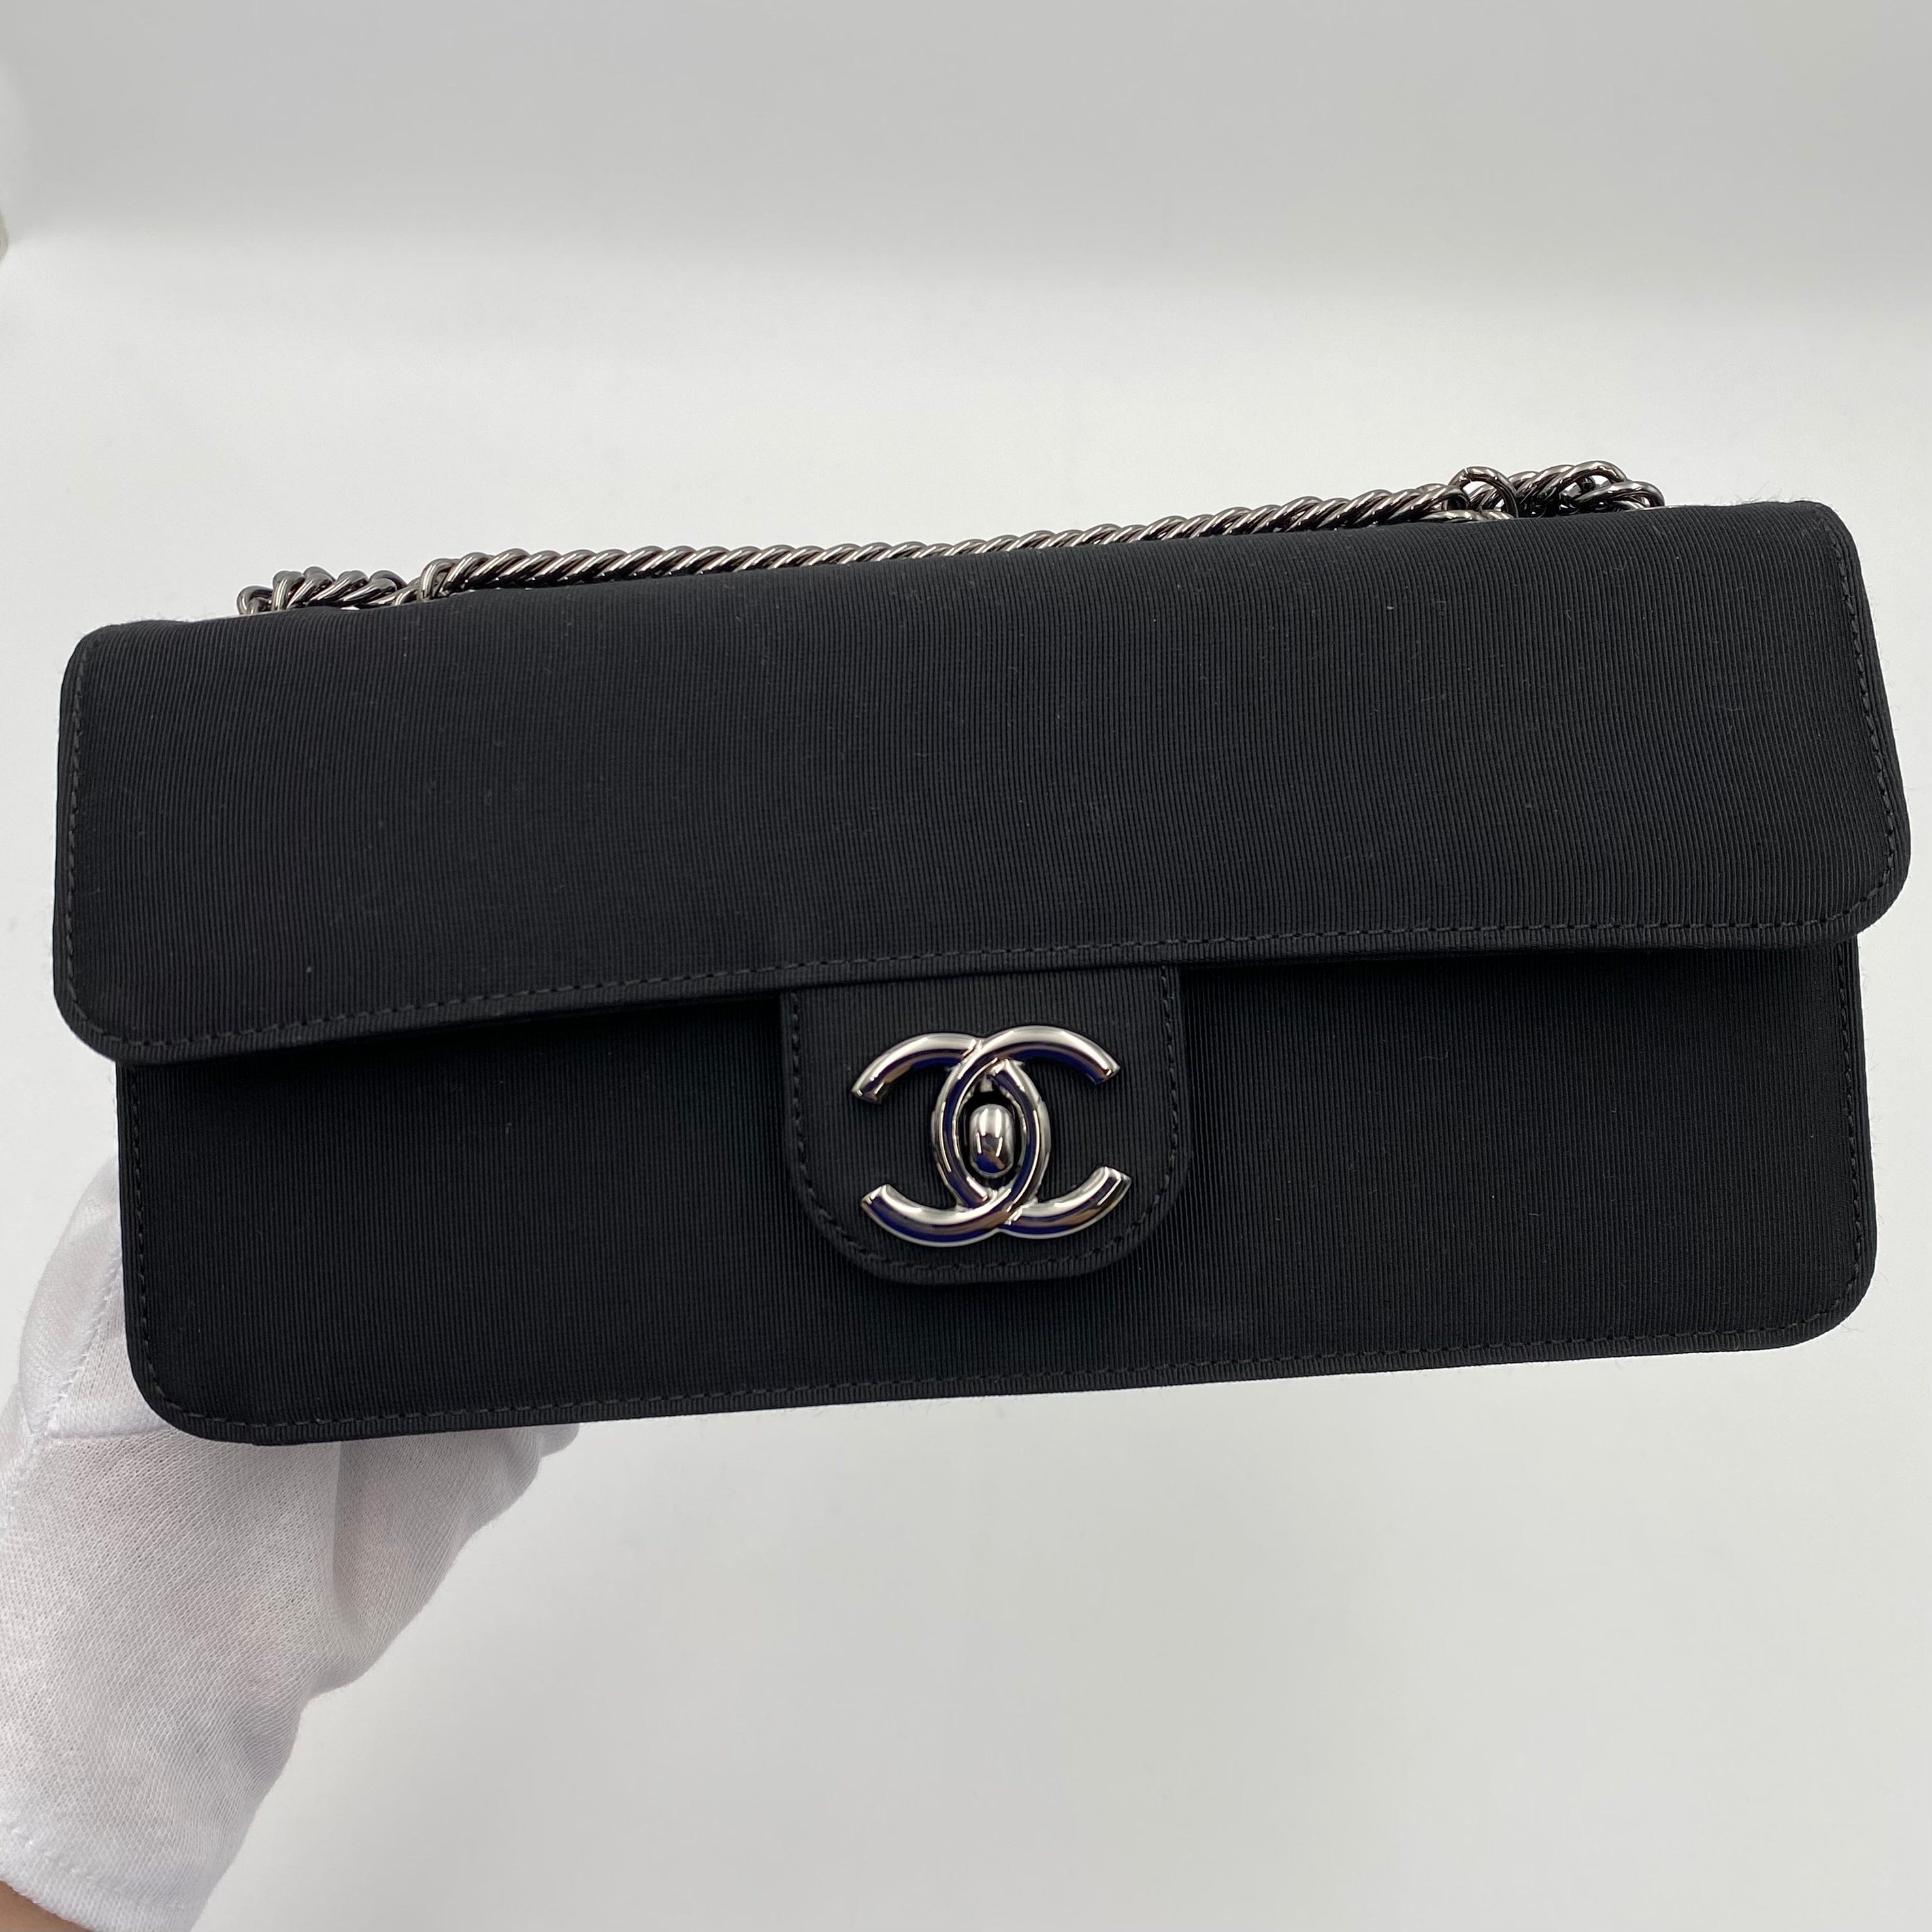 Chanel CHANEL VINTAGE PARTY CHAIN SHOULDER BAG BLACK CANVAS 90221004